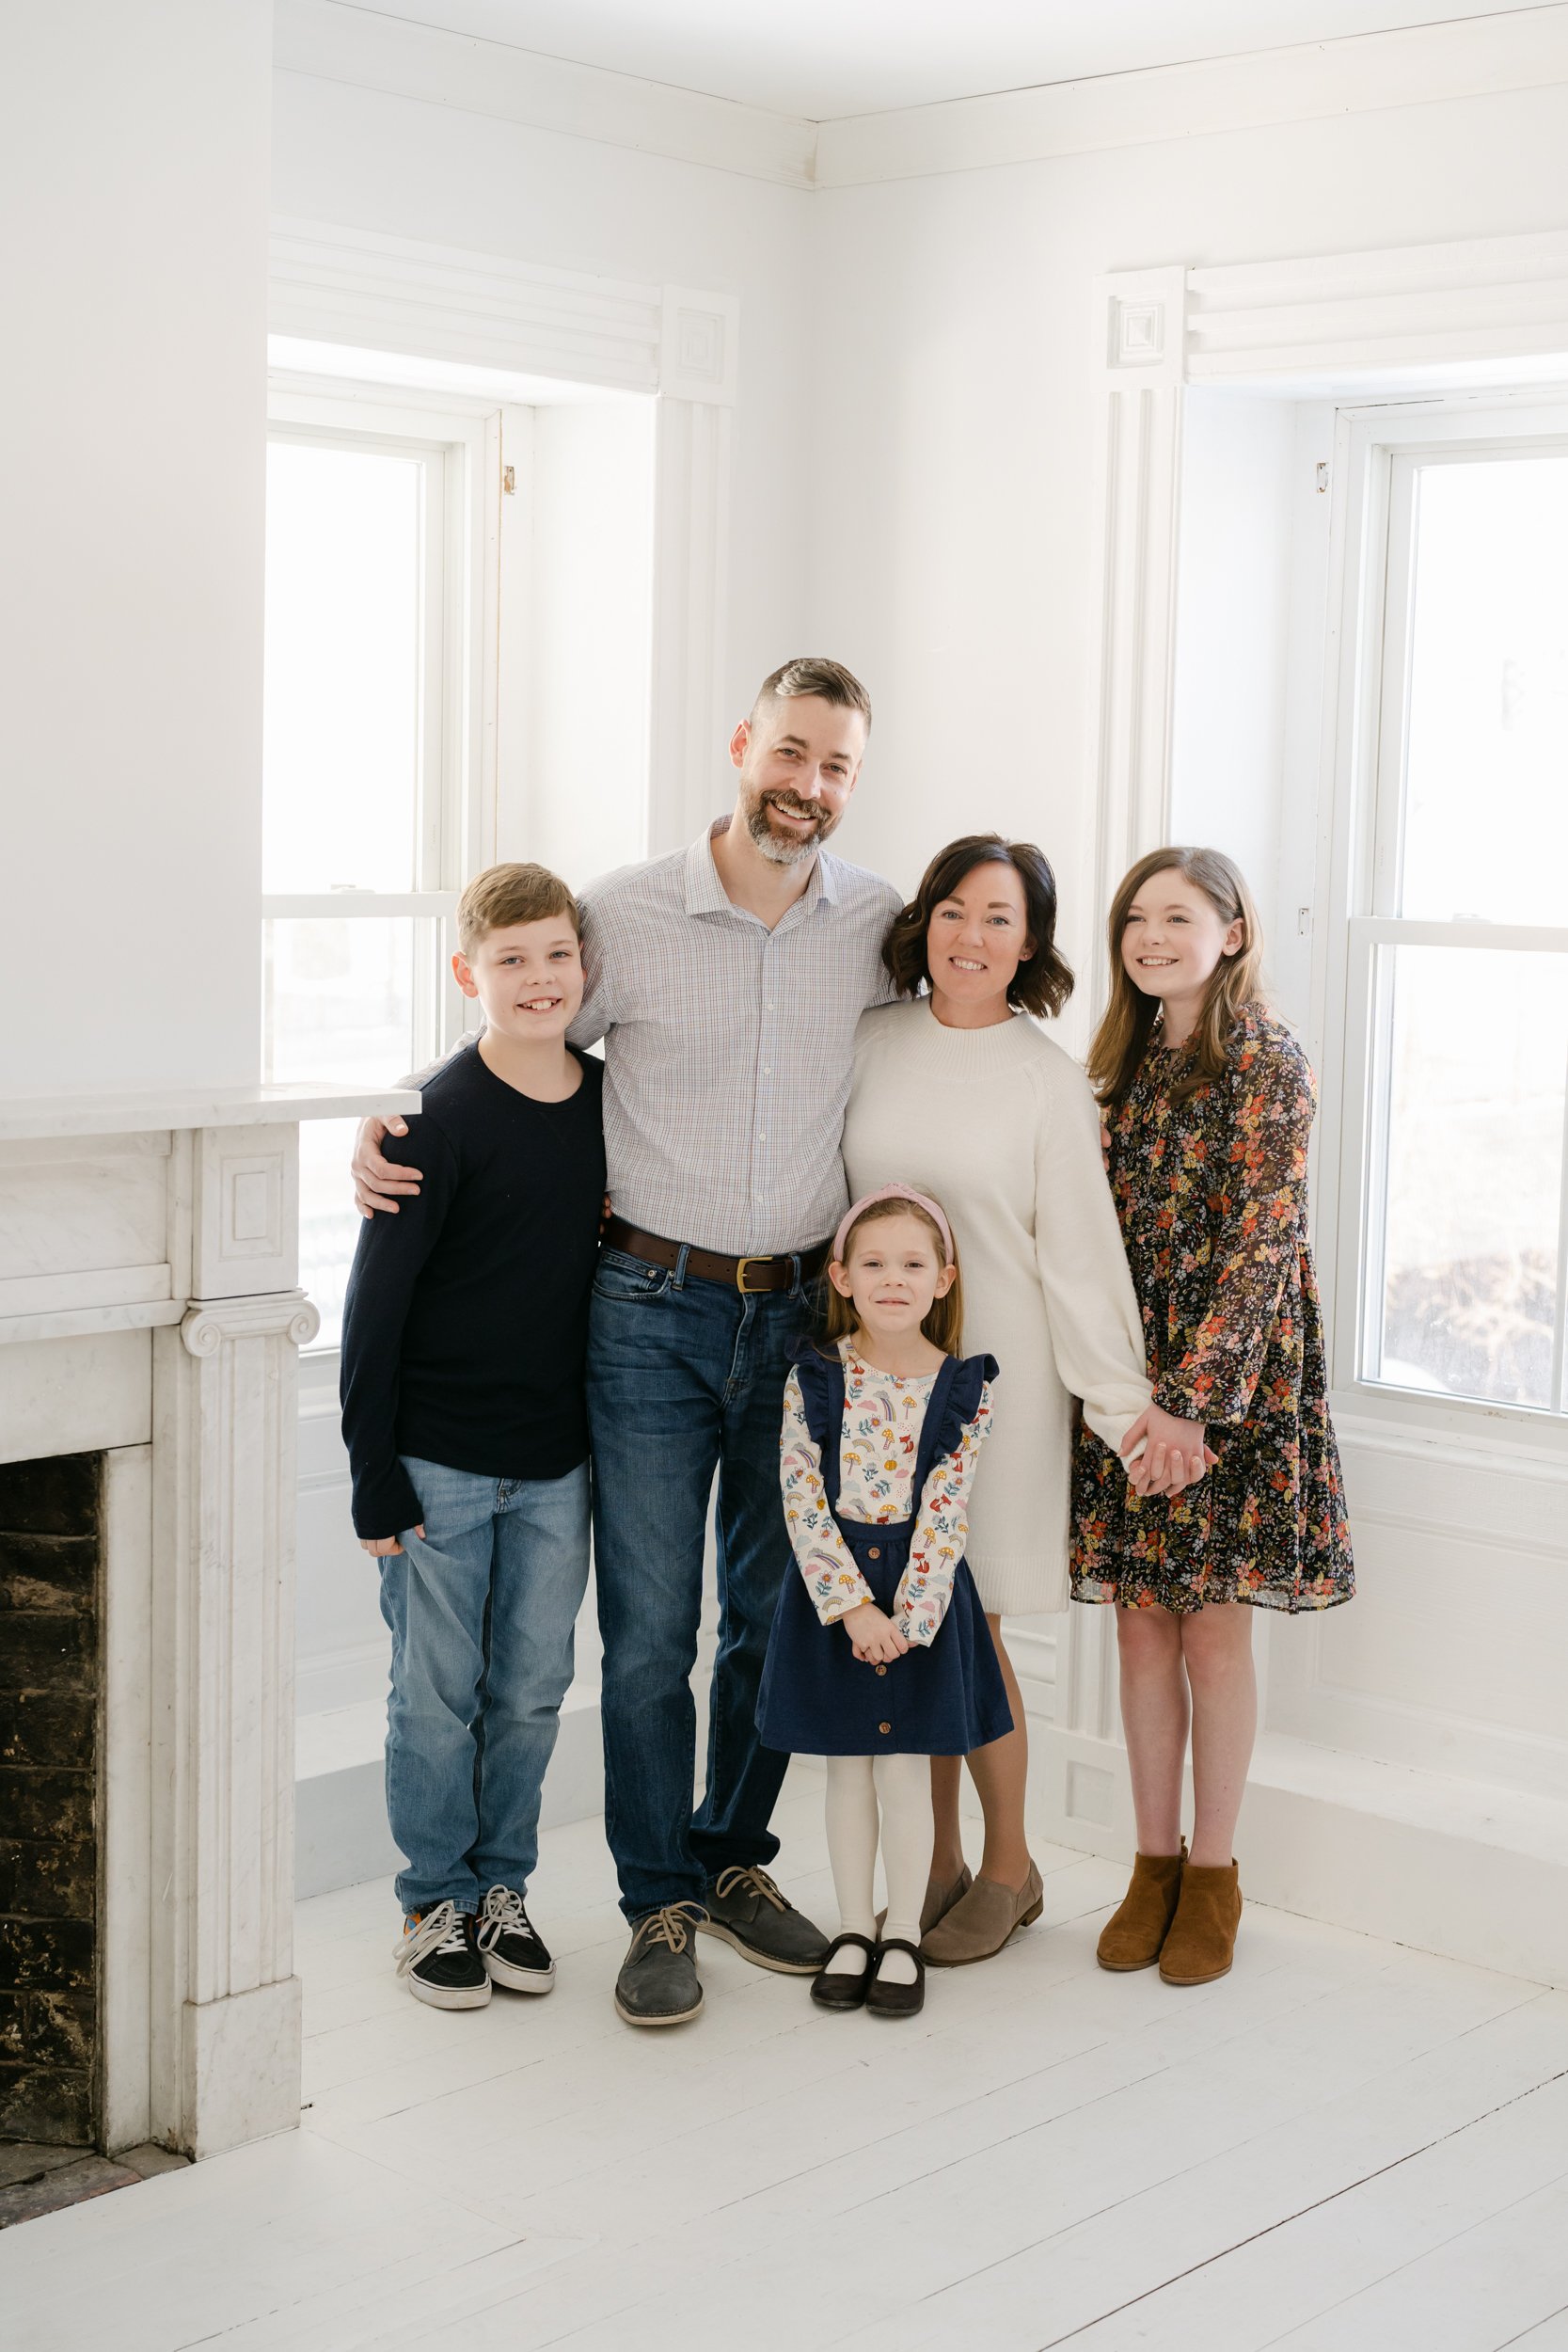 Family photographer serving Sturbridge, and greater Boston area 